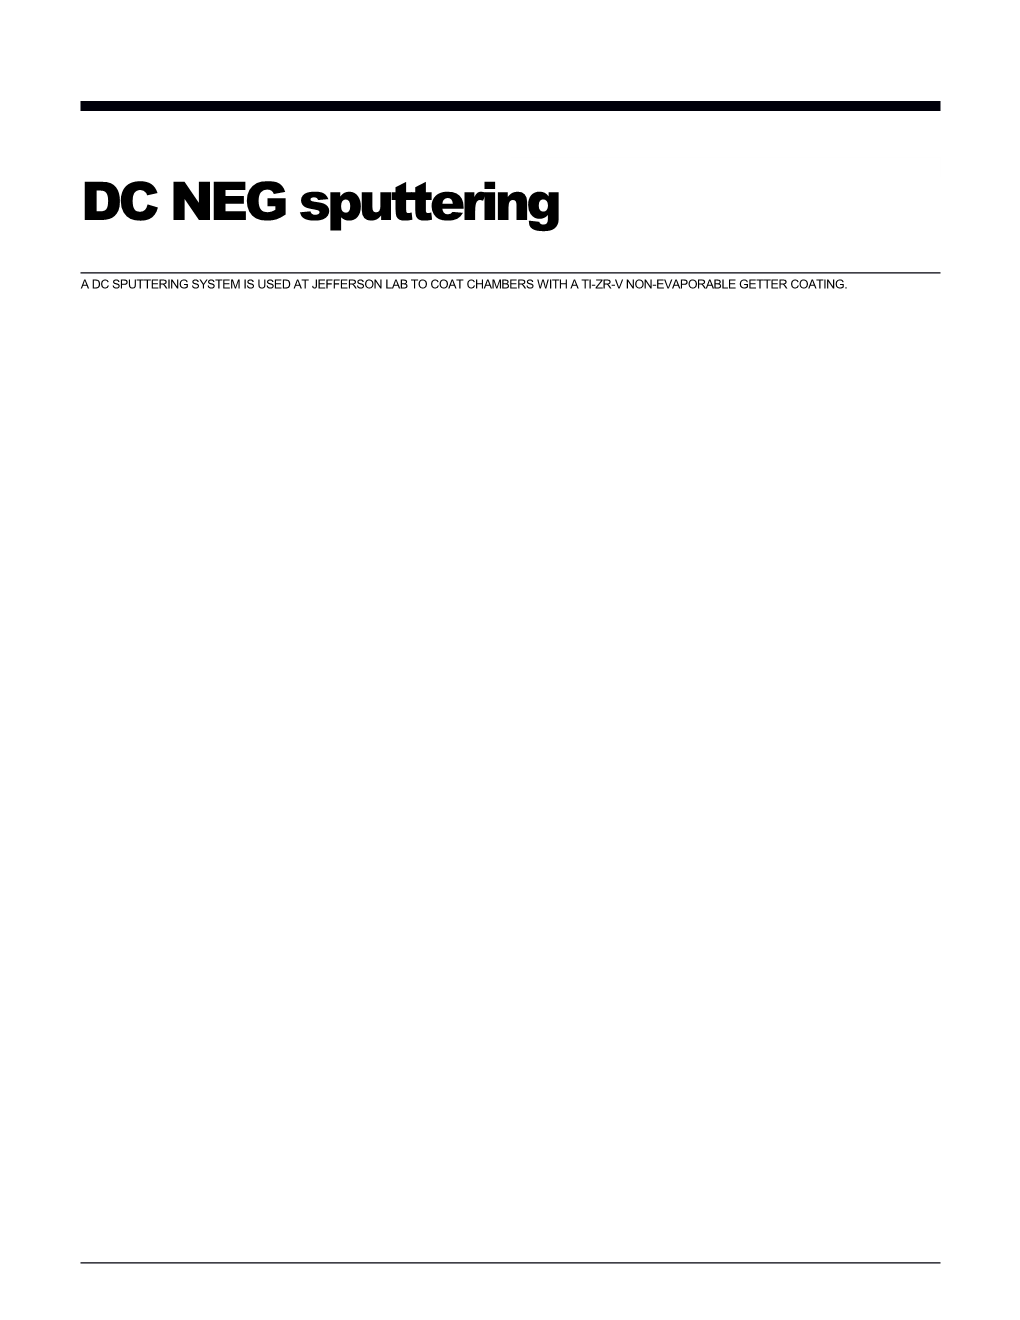 DC NEG Sputtering